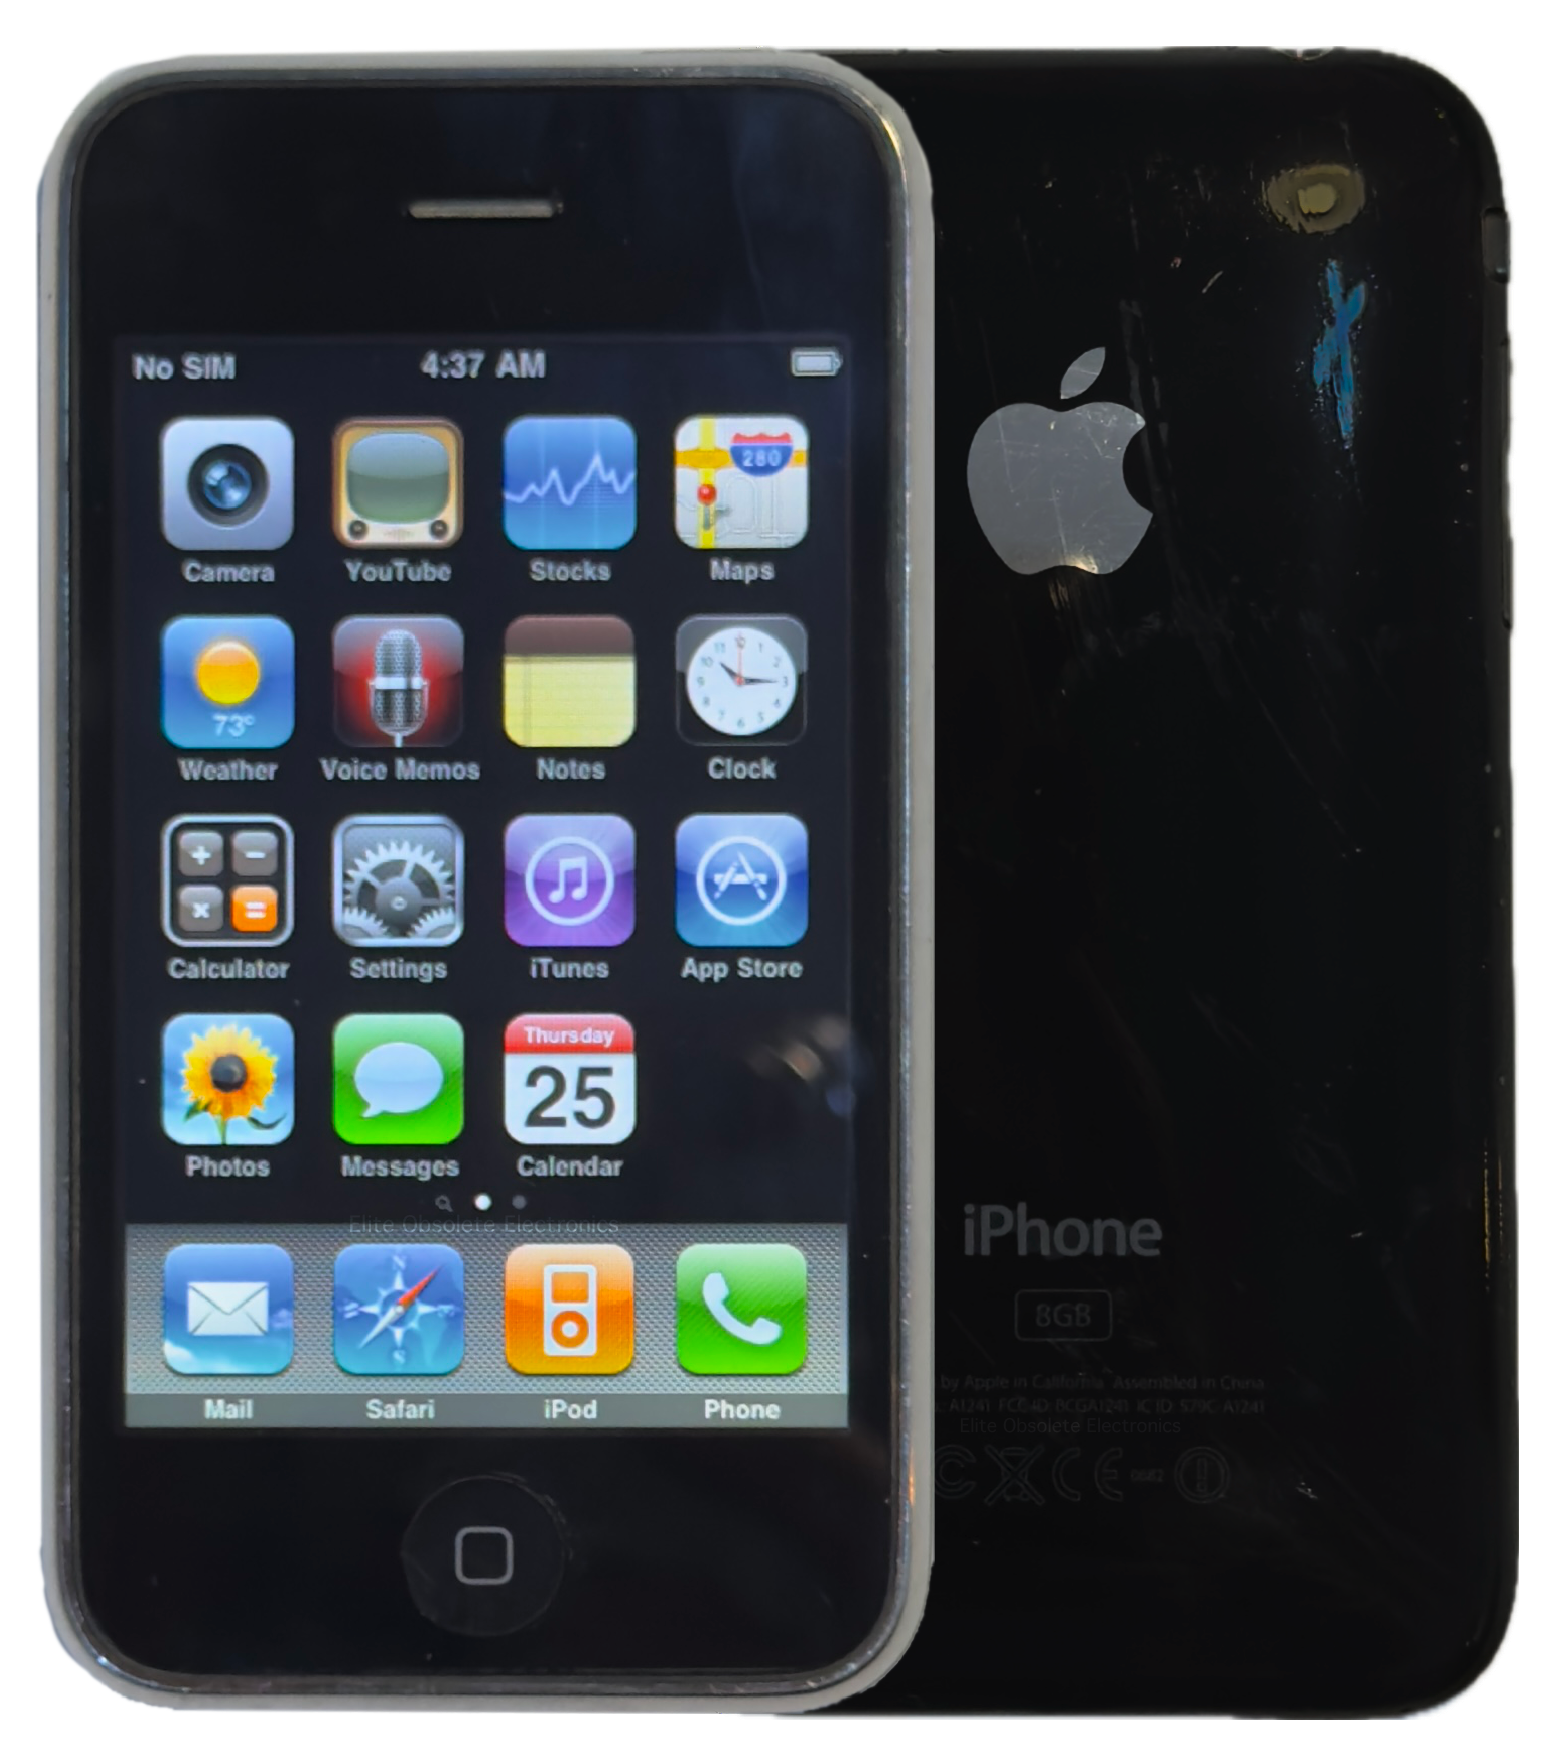 Original Used Apple iPhone 3G 8GB Black A1241 MB046LL/A iOS 3.1.3